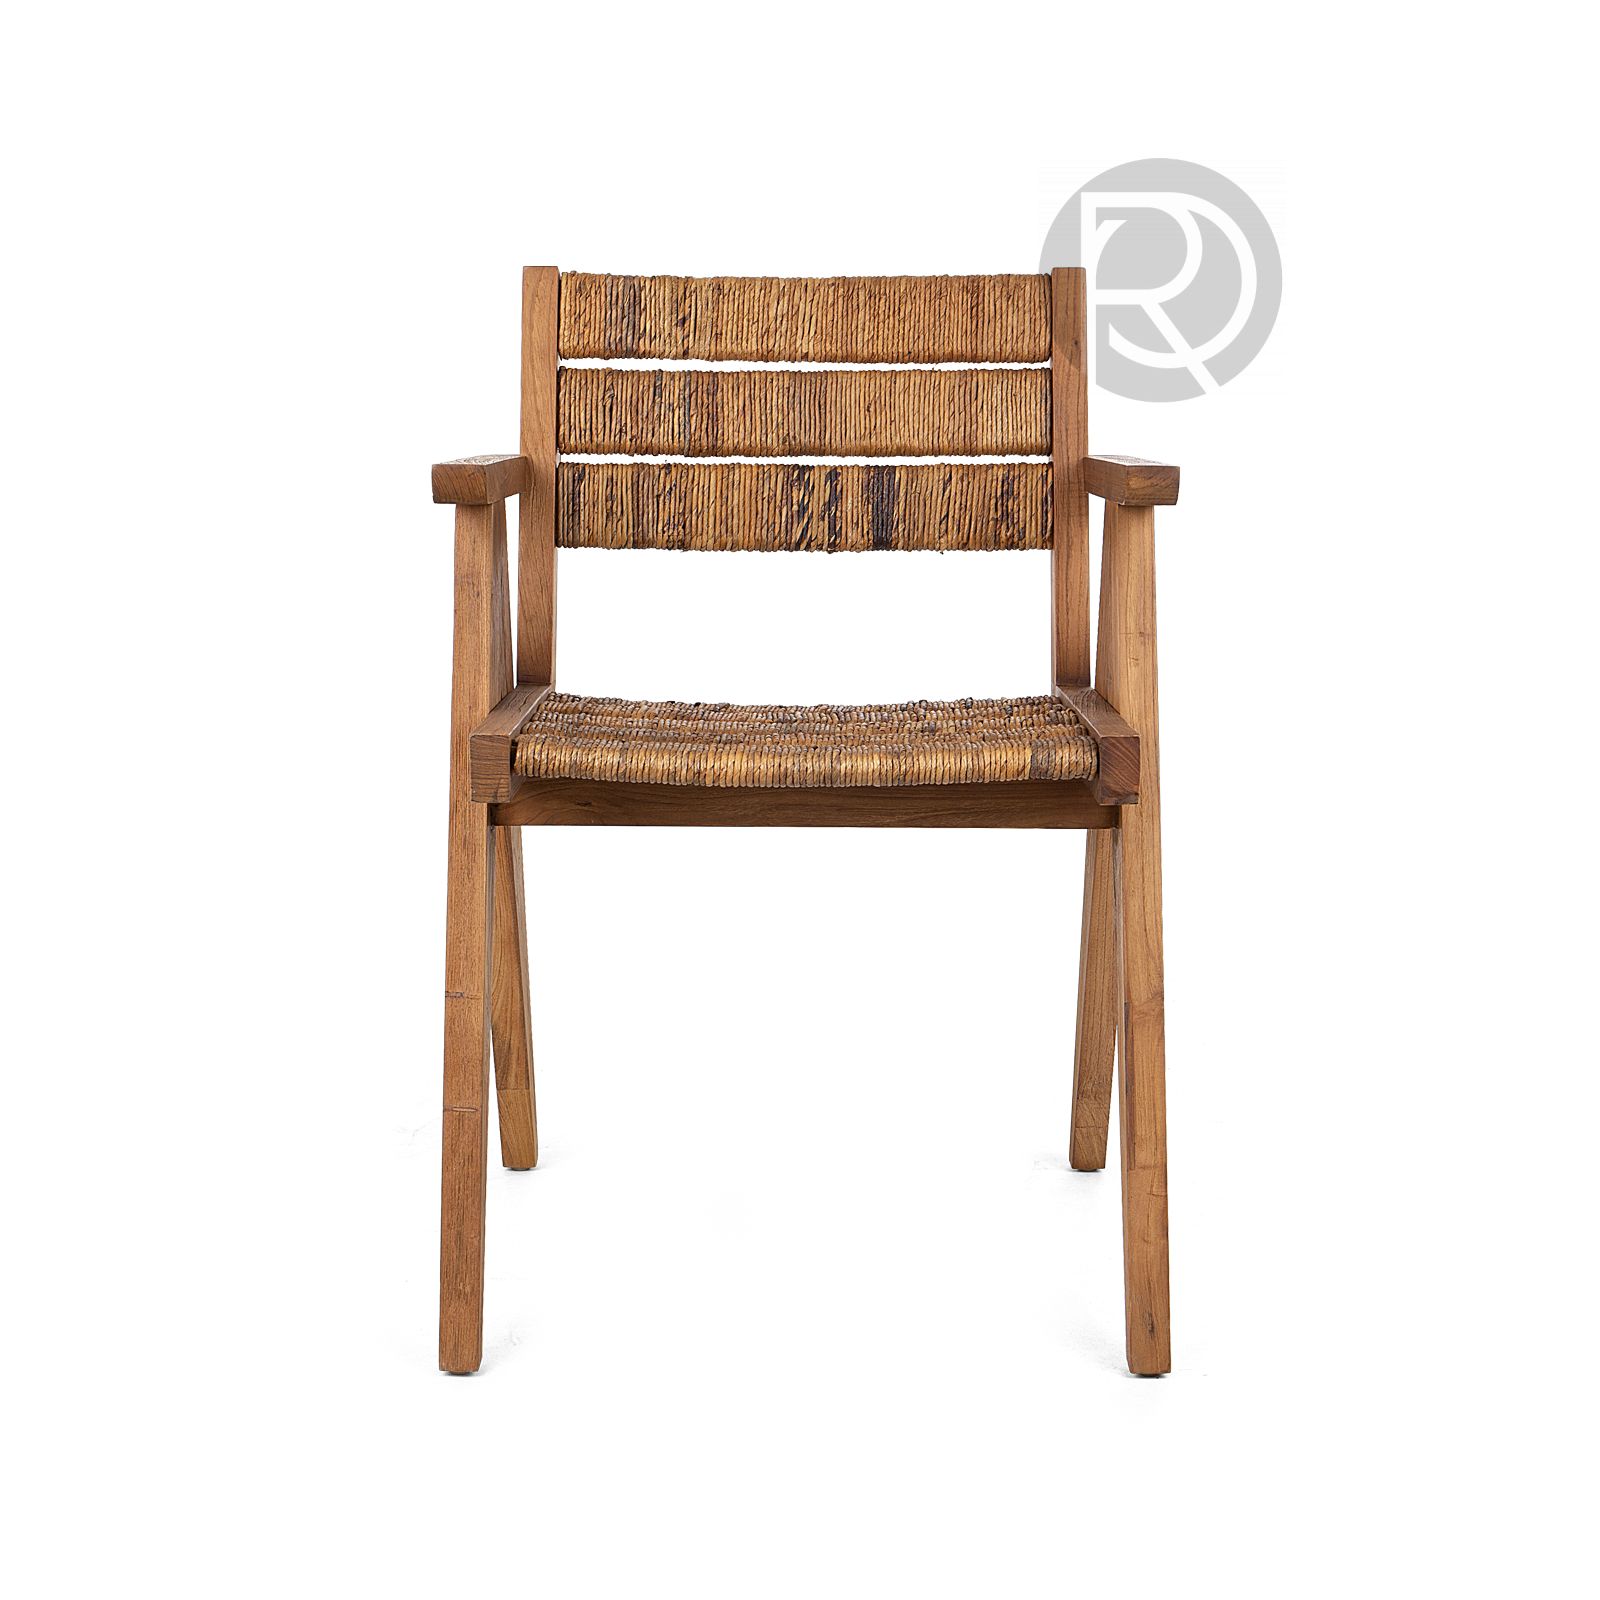 CATERPILLAR chair by DBODHI